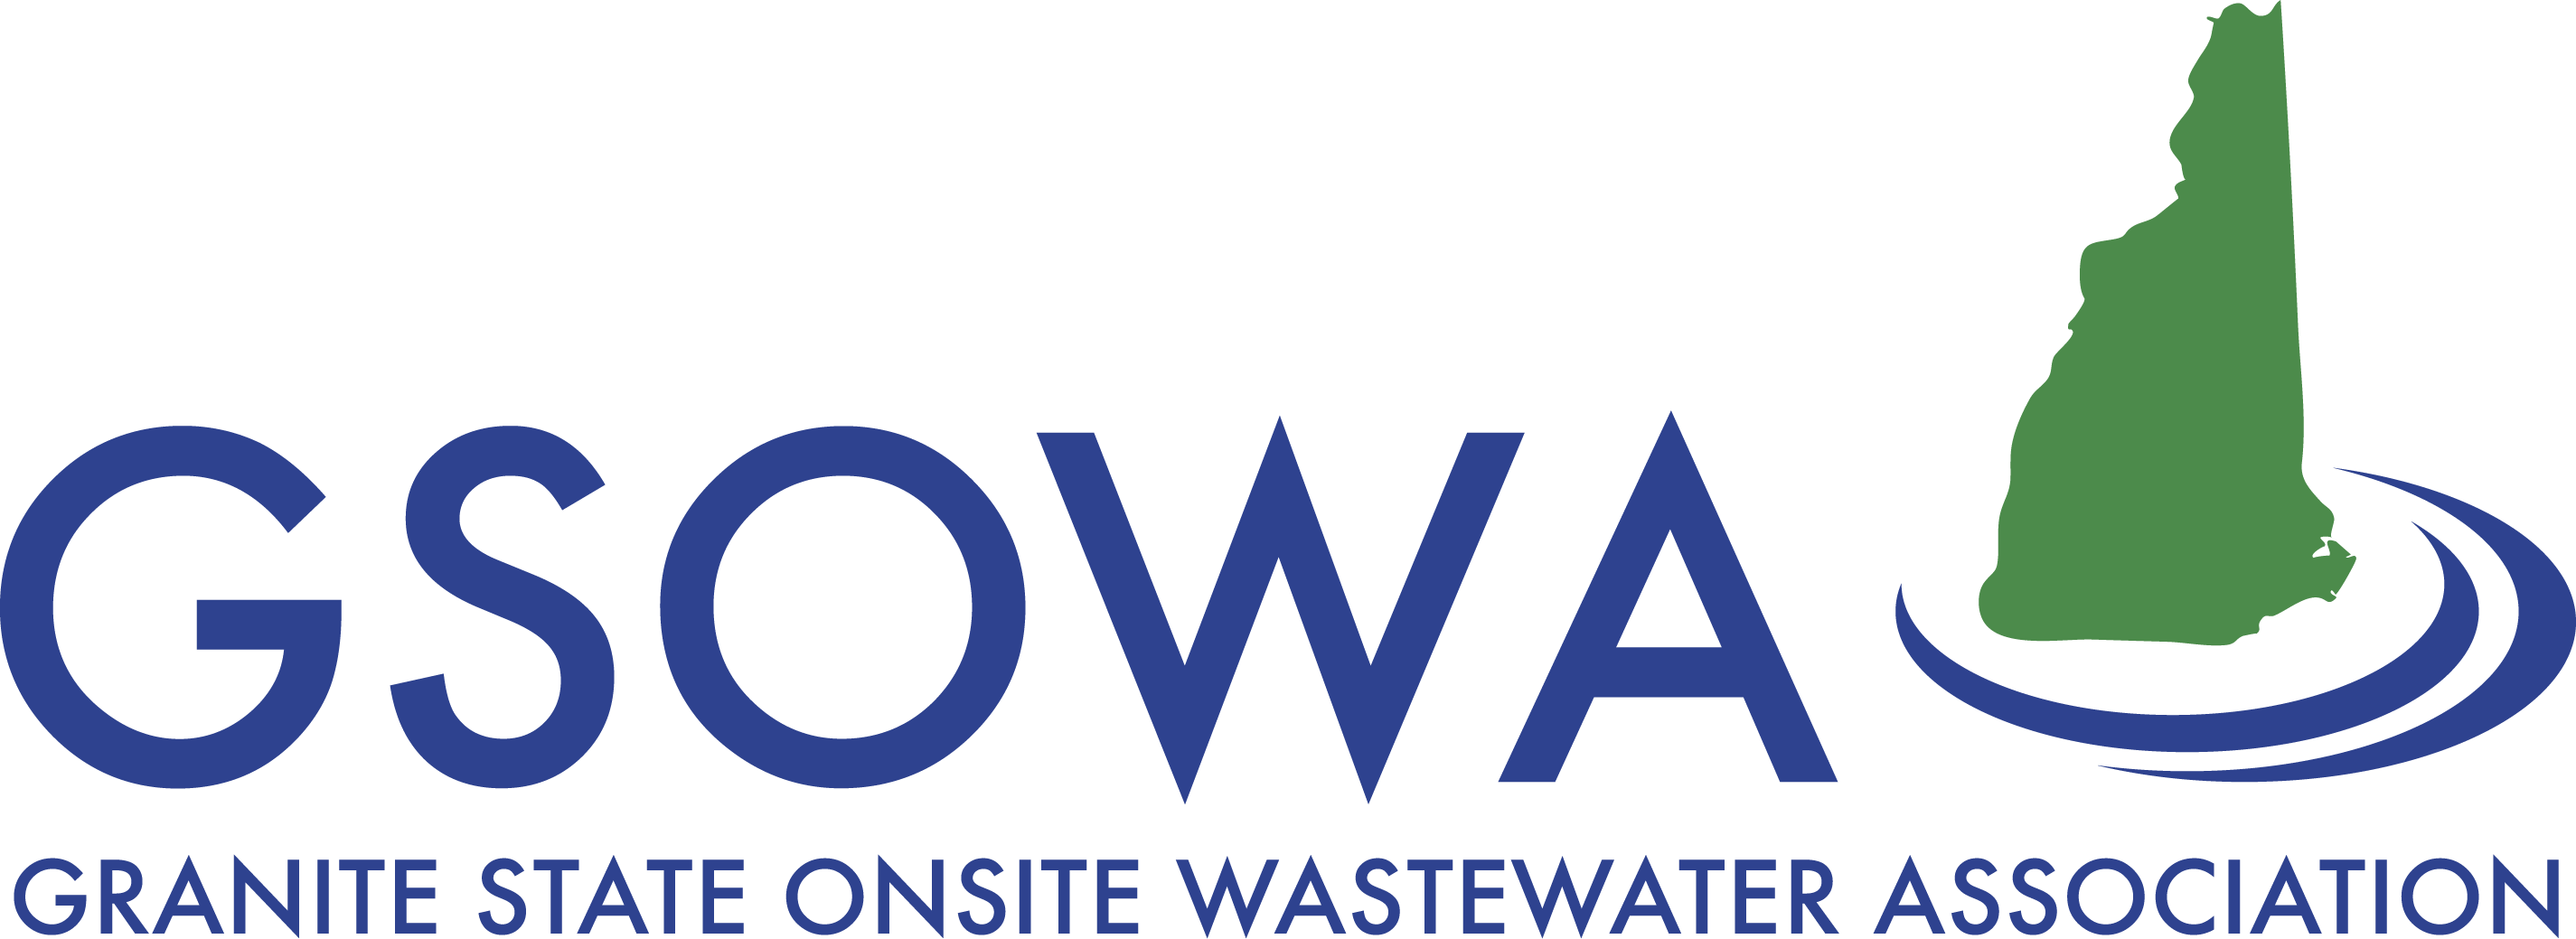 Granite State Onsite Wastewater Association